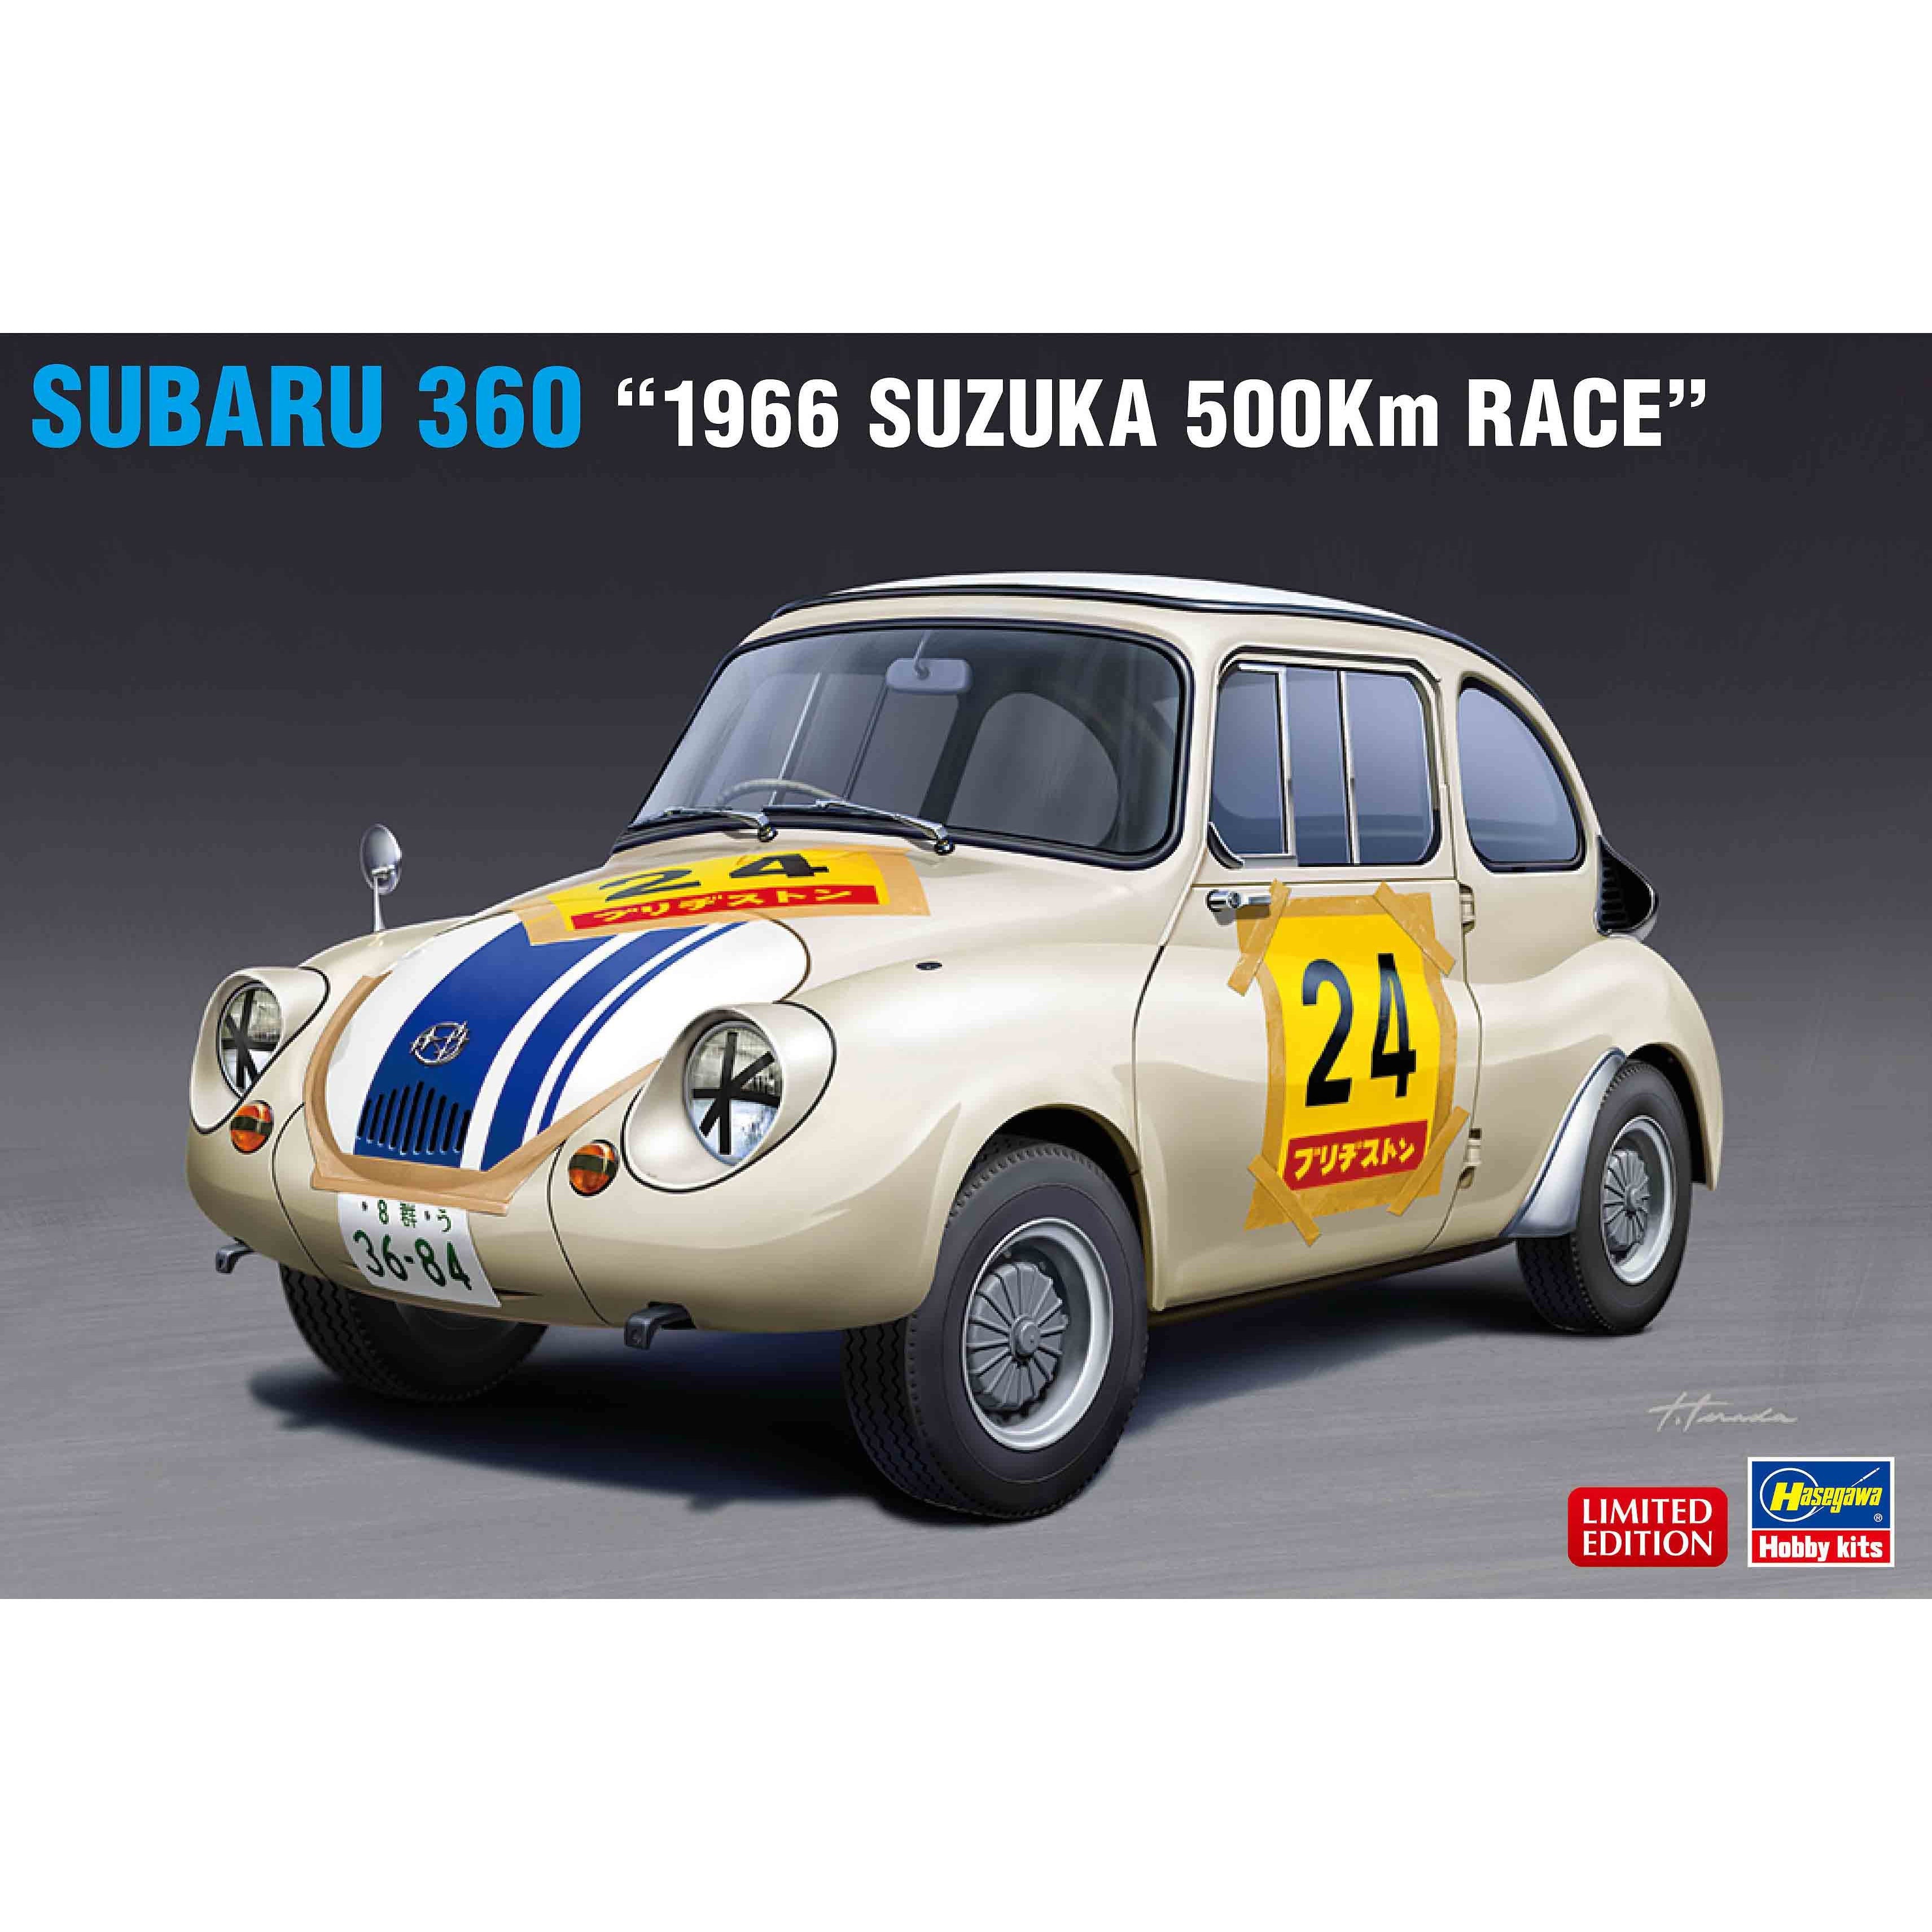 Subaru 360 "1966 Suzuka 500Km Race" 1/24 #20569 by Hasegawa